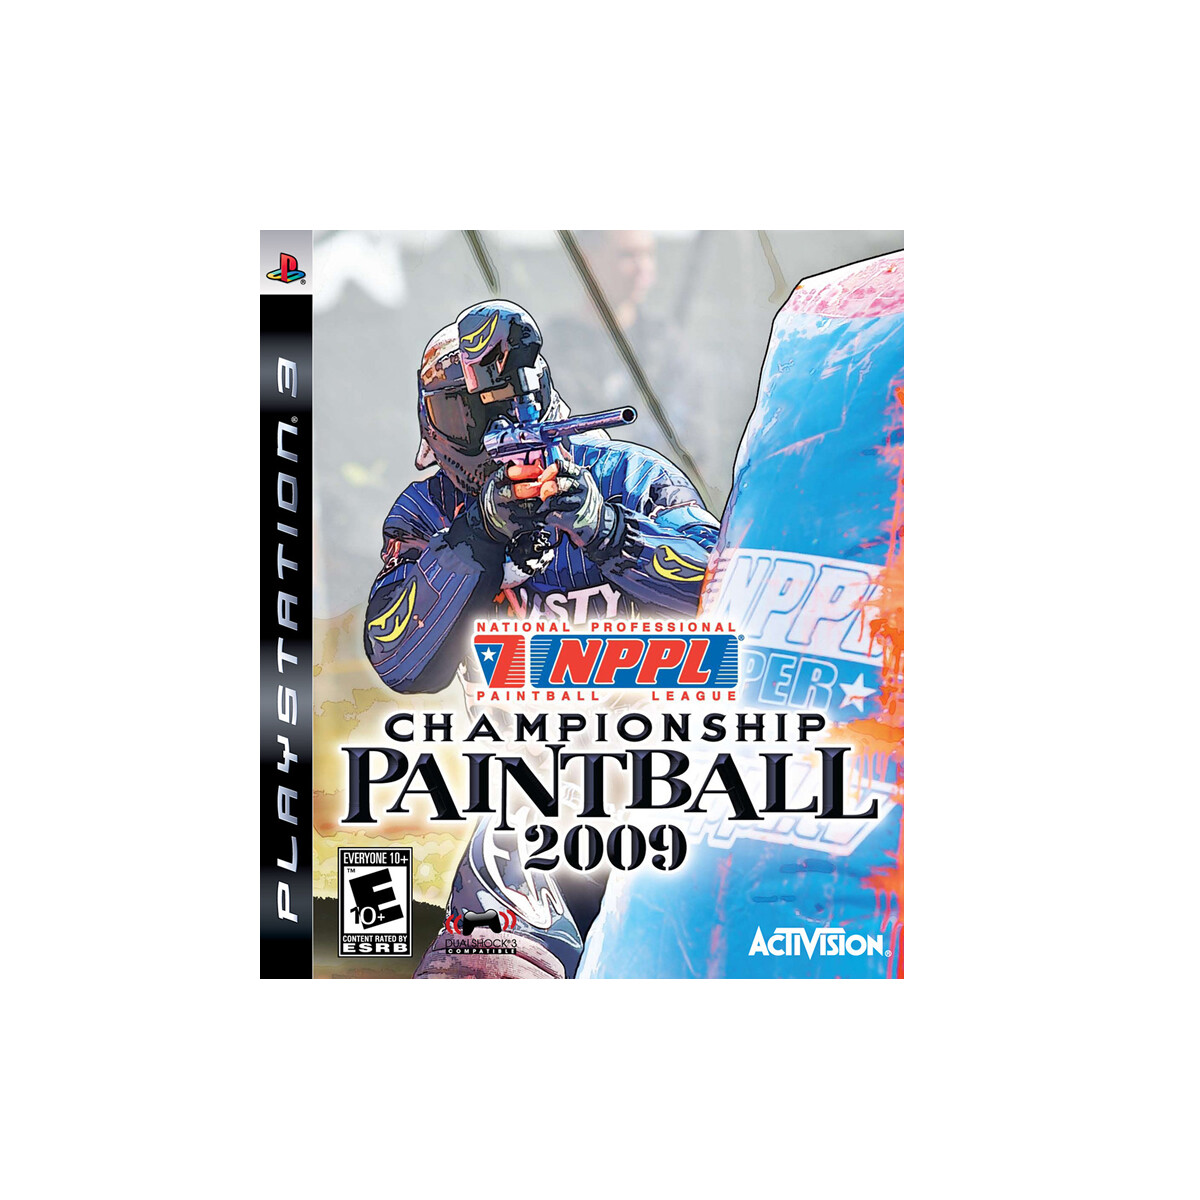 PS3 PAINTBALL CHAMPIONSHIP 2009 